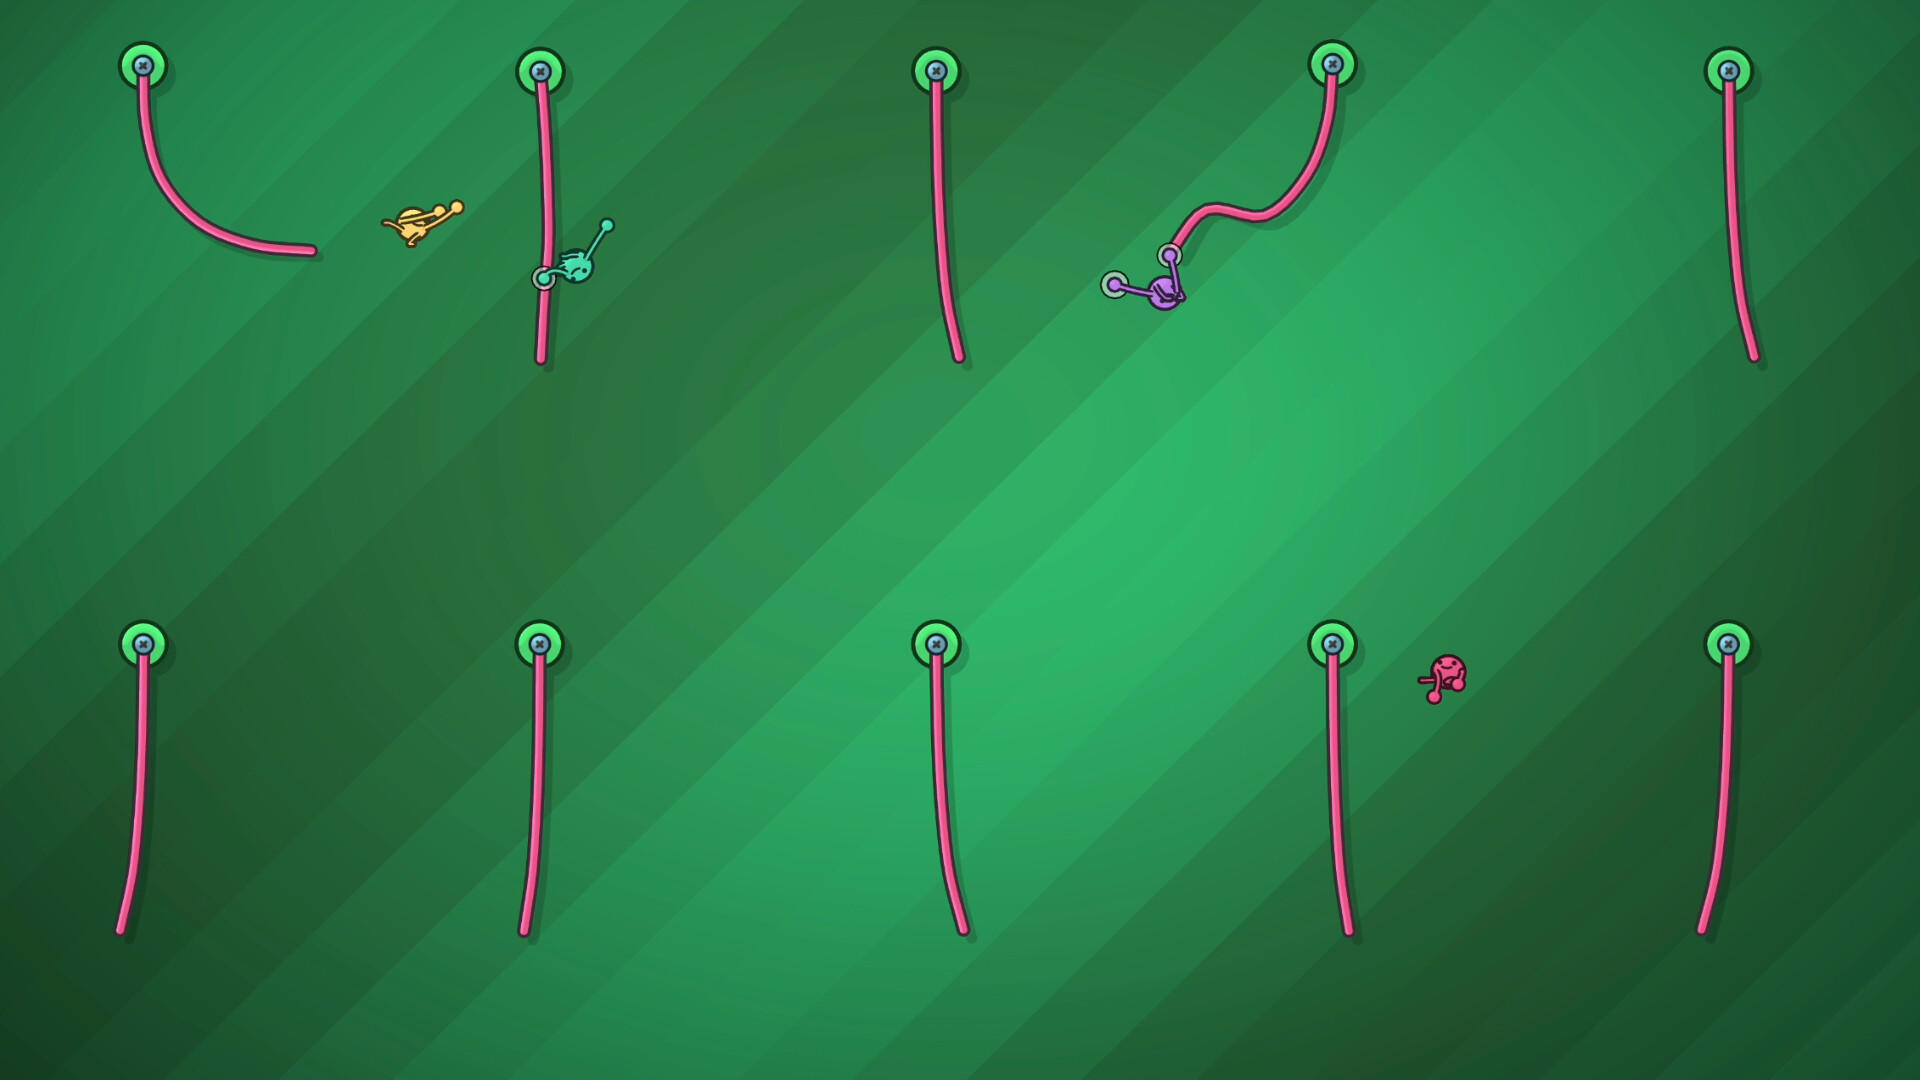 Oblin Party screenshot game